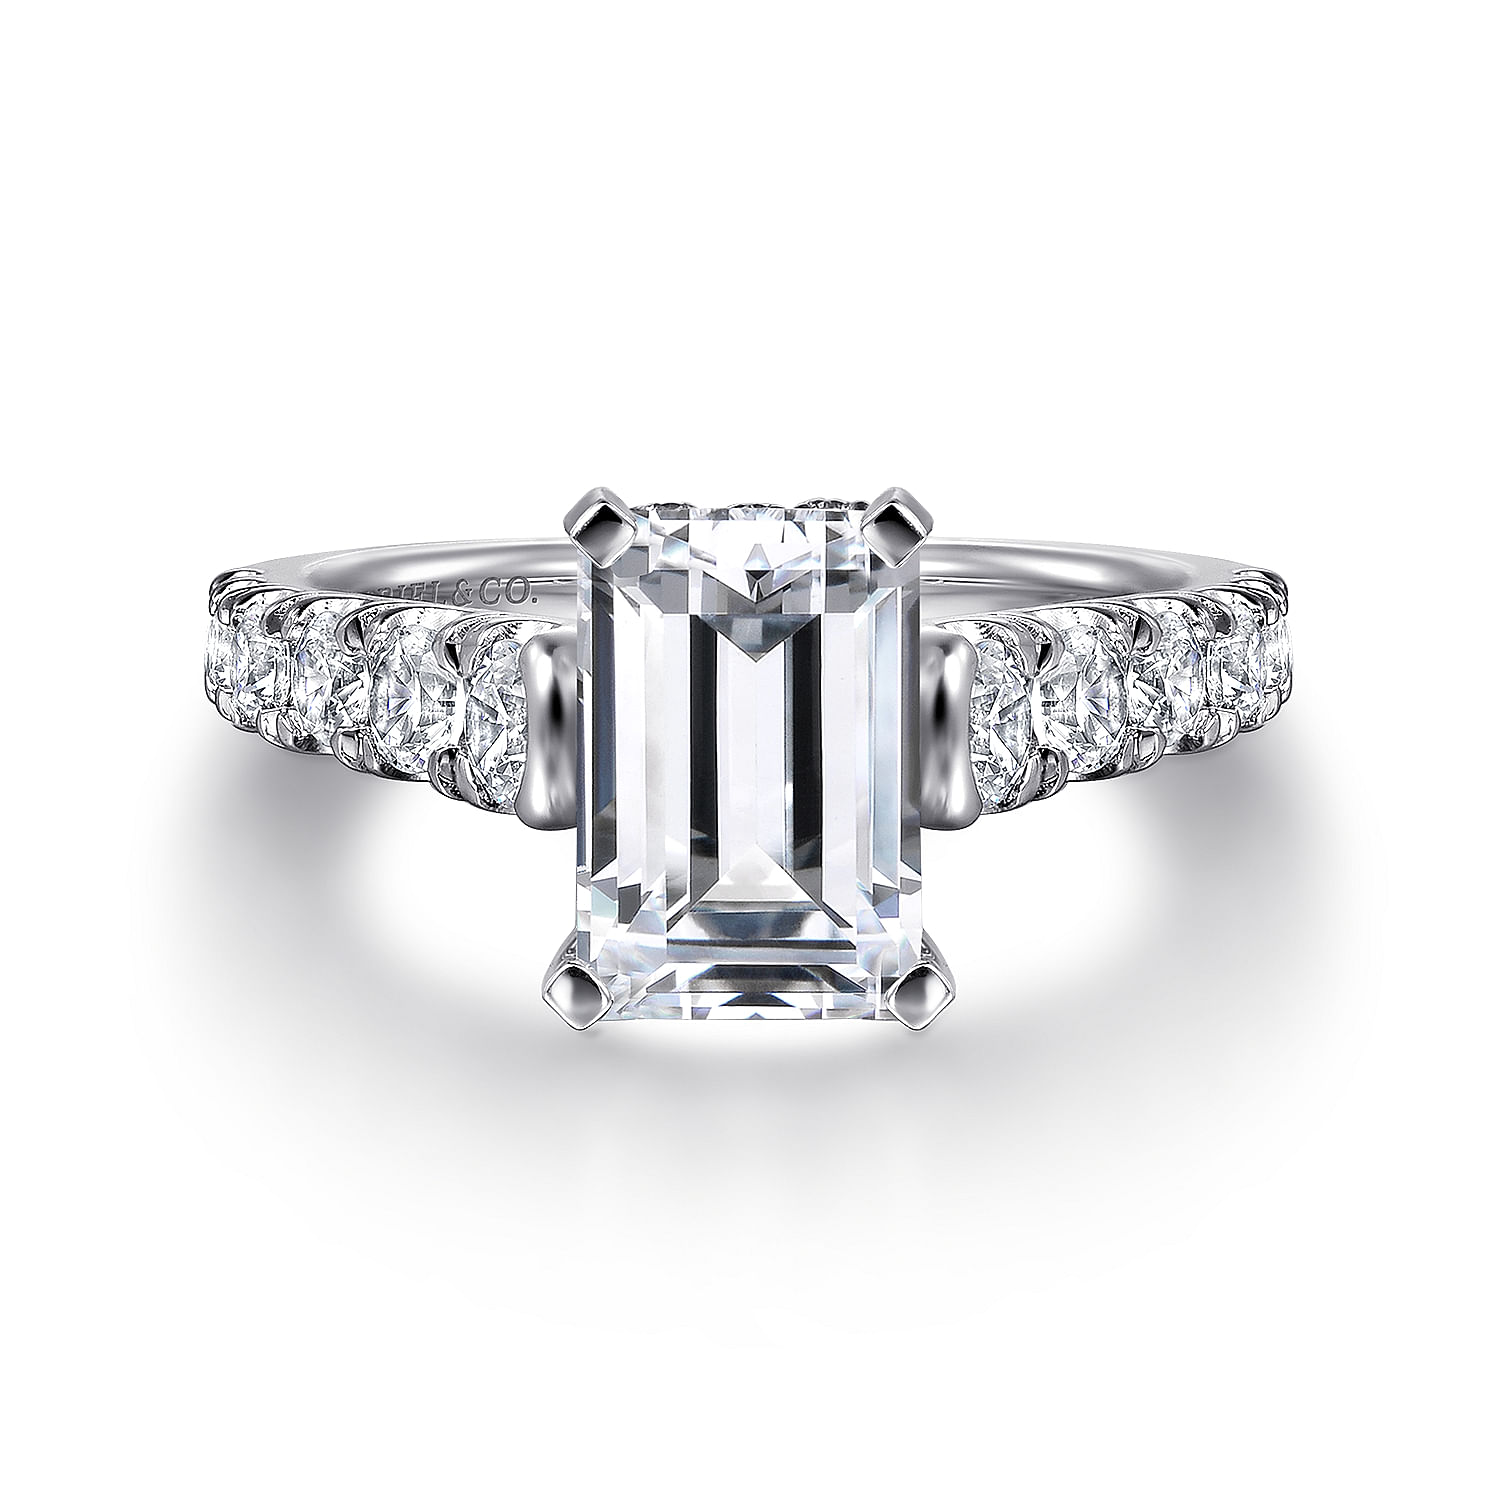 Piper - 14K White Gold Emerald Cut Diamond Engagement Ring